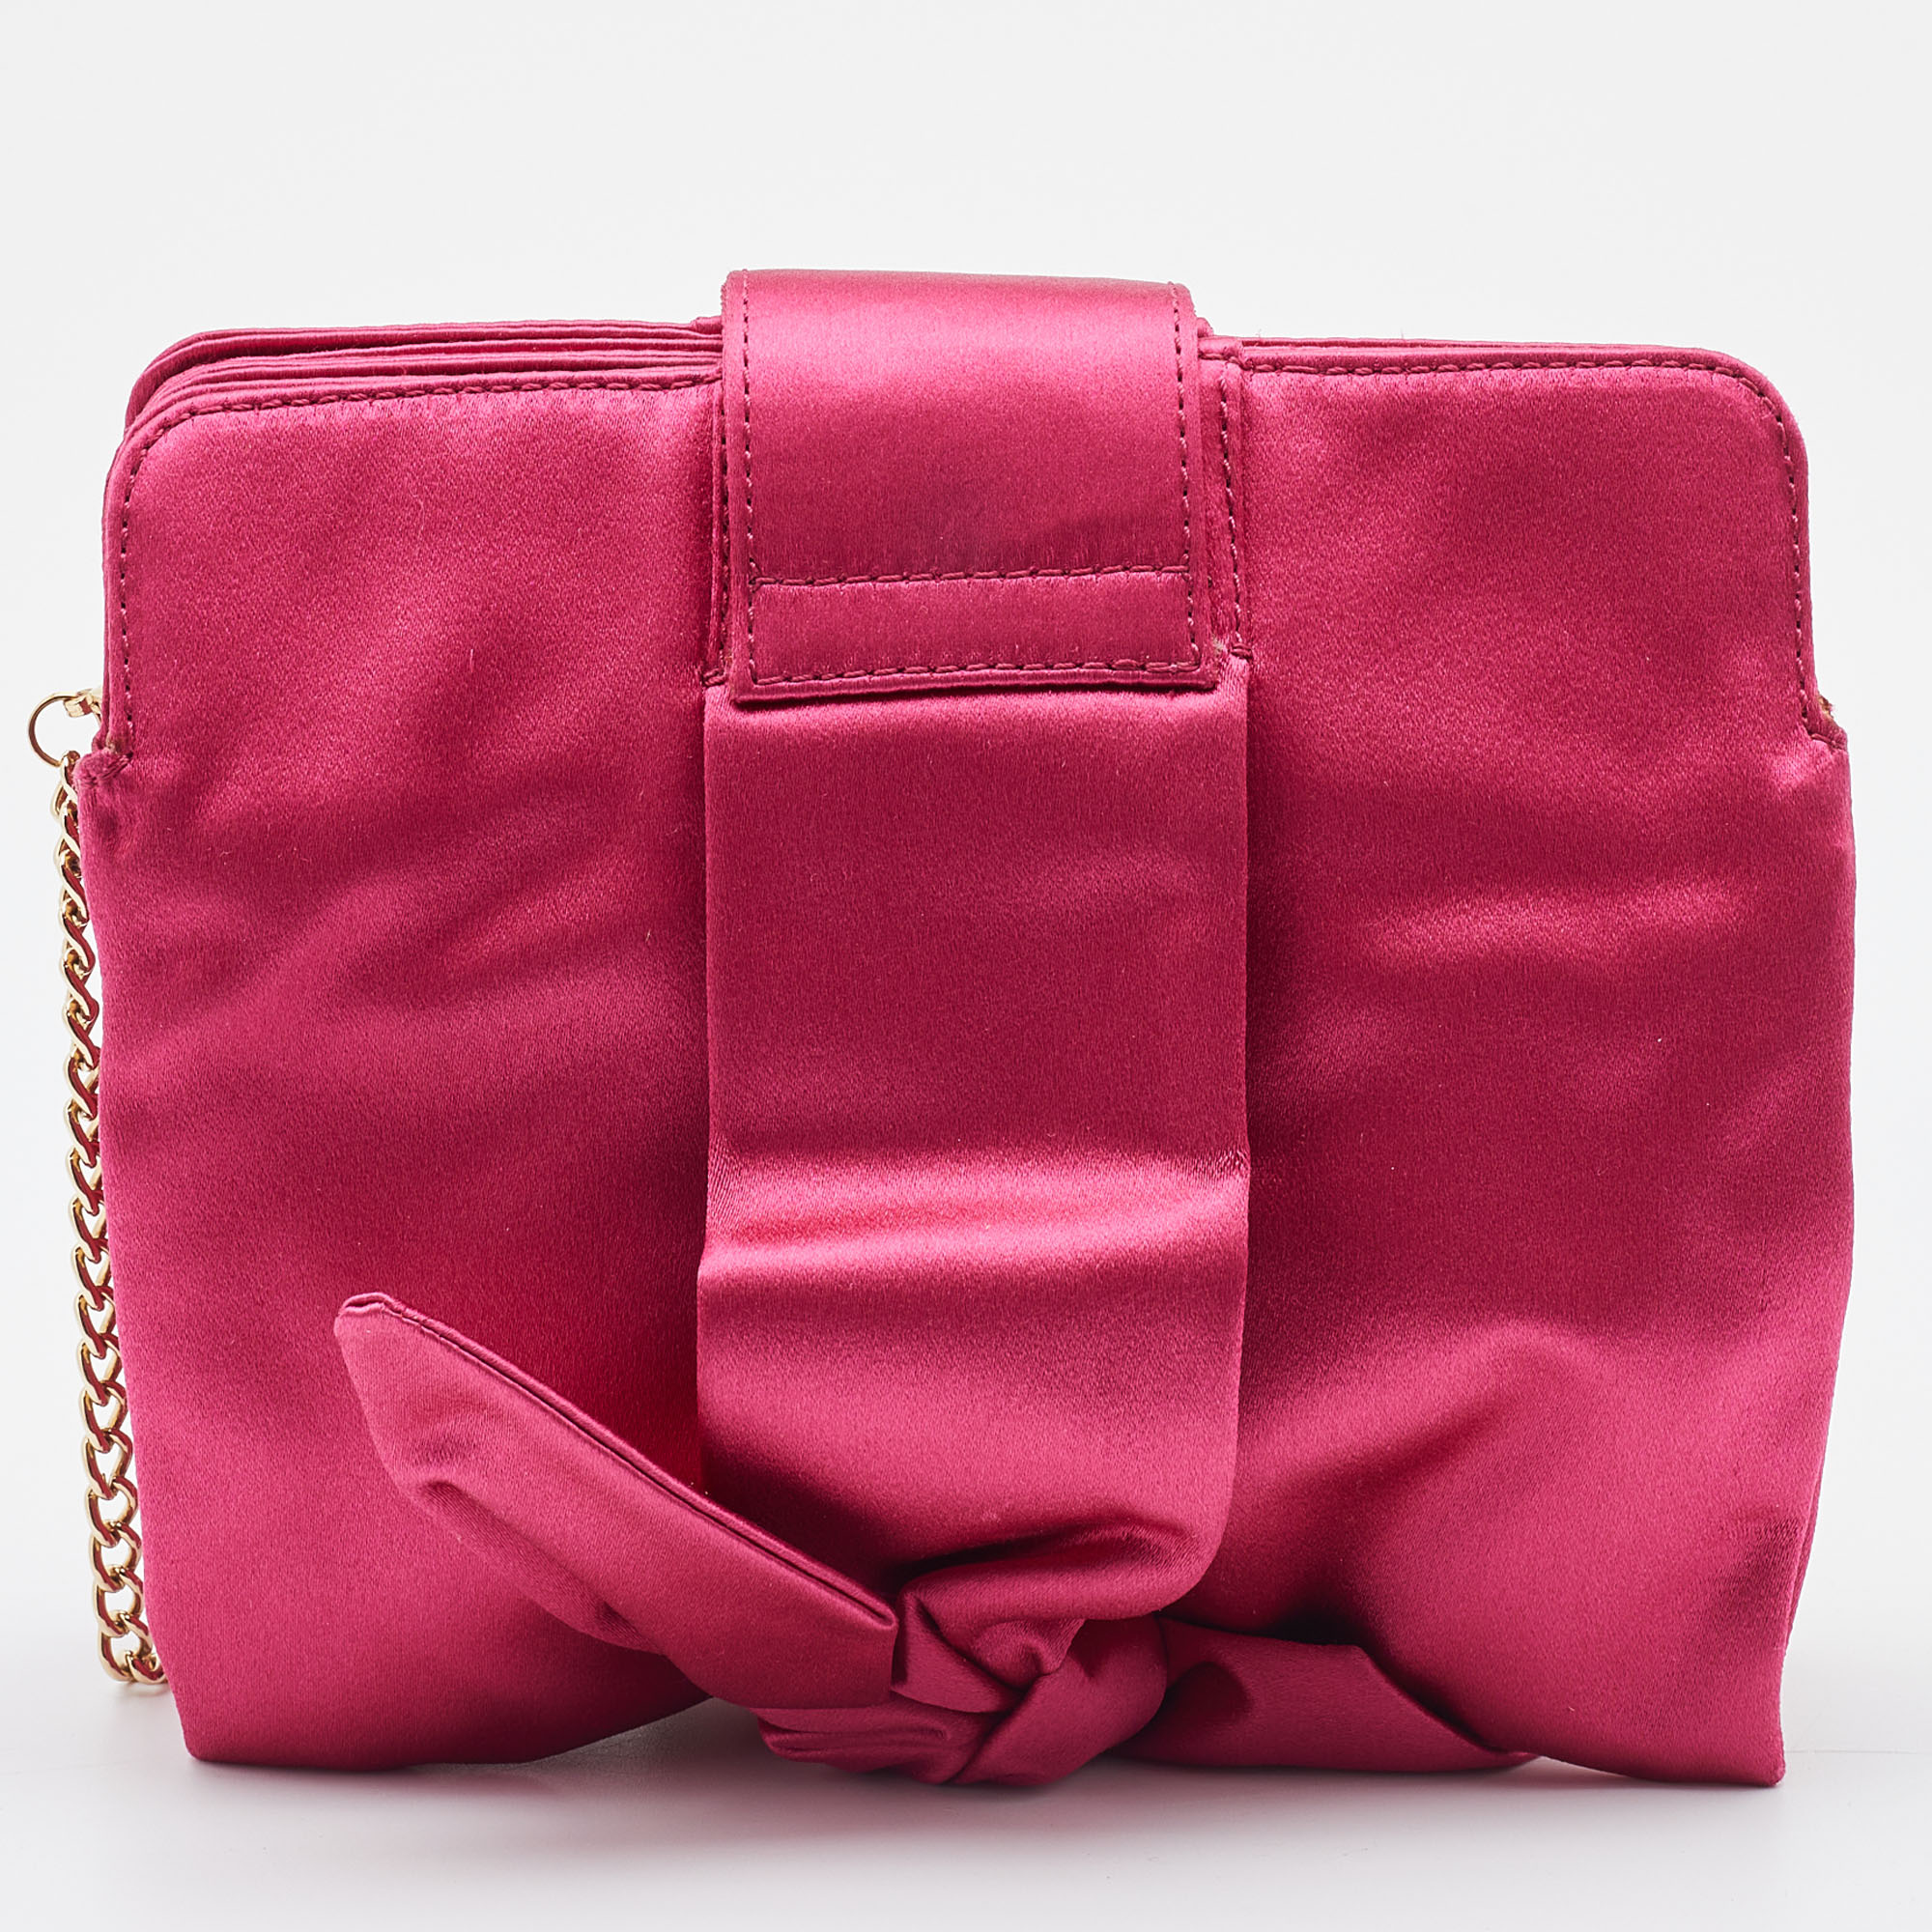 Emporio Armani Pink Satin Chain Bag